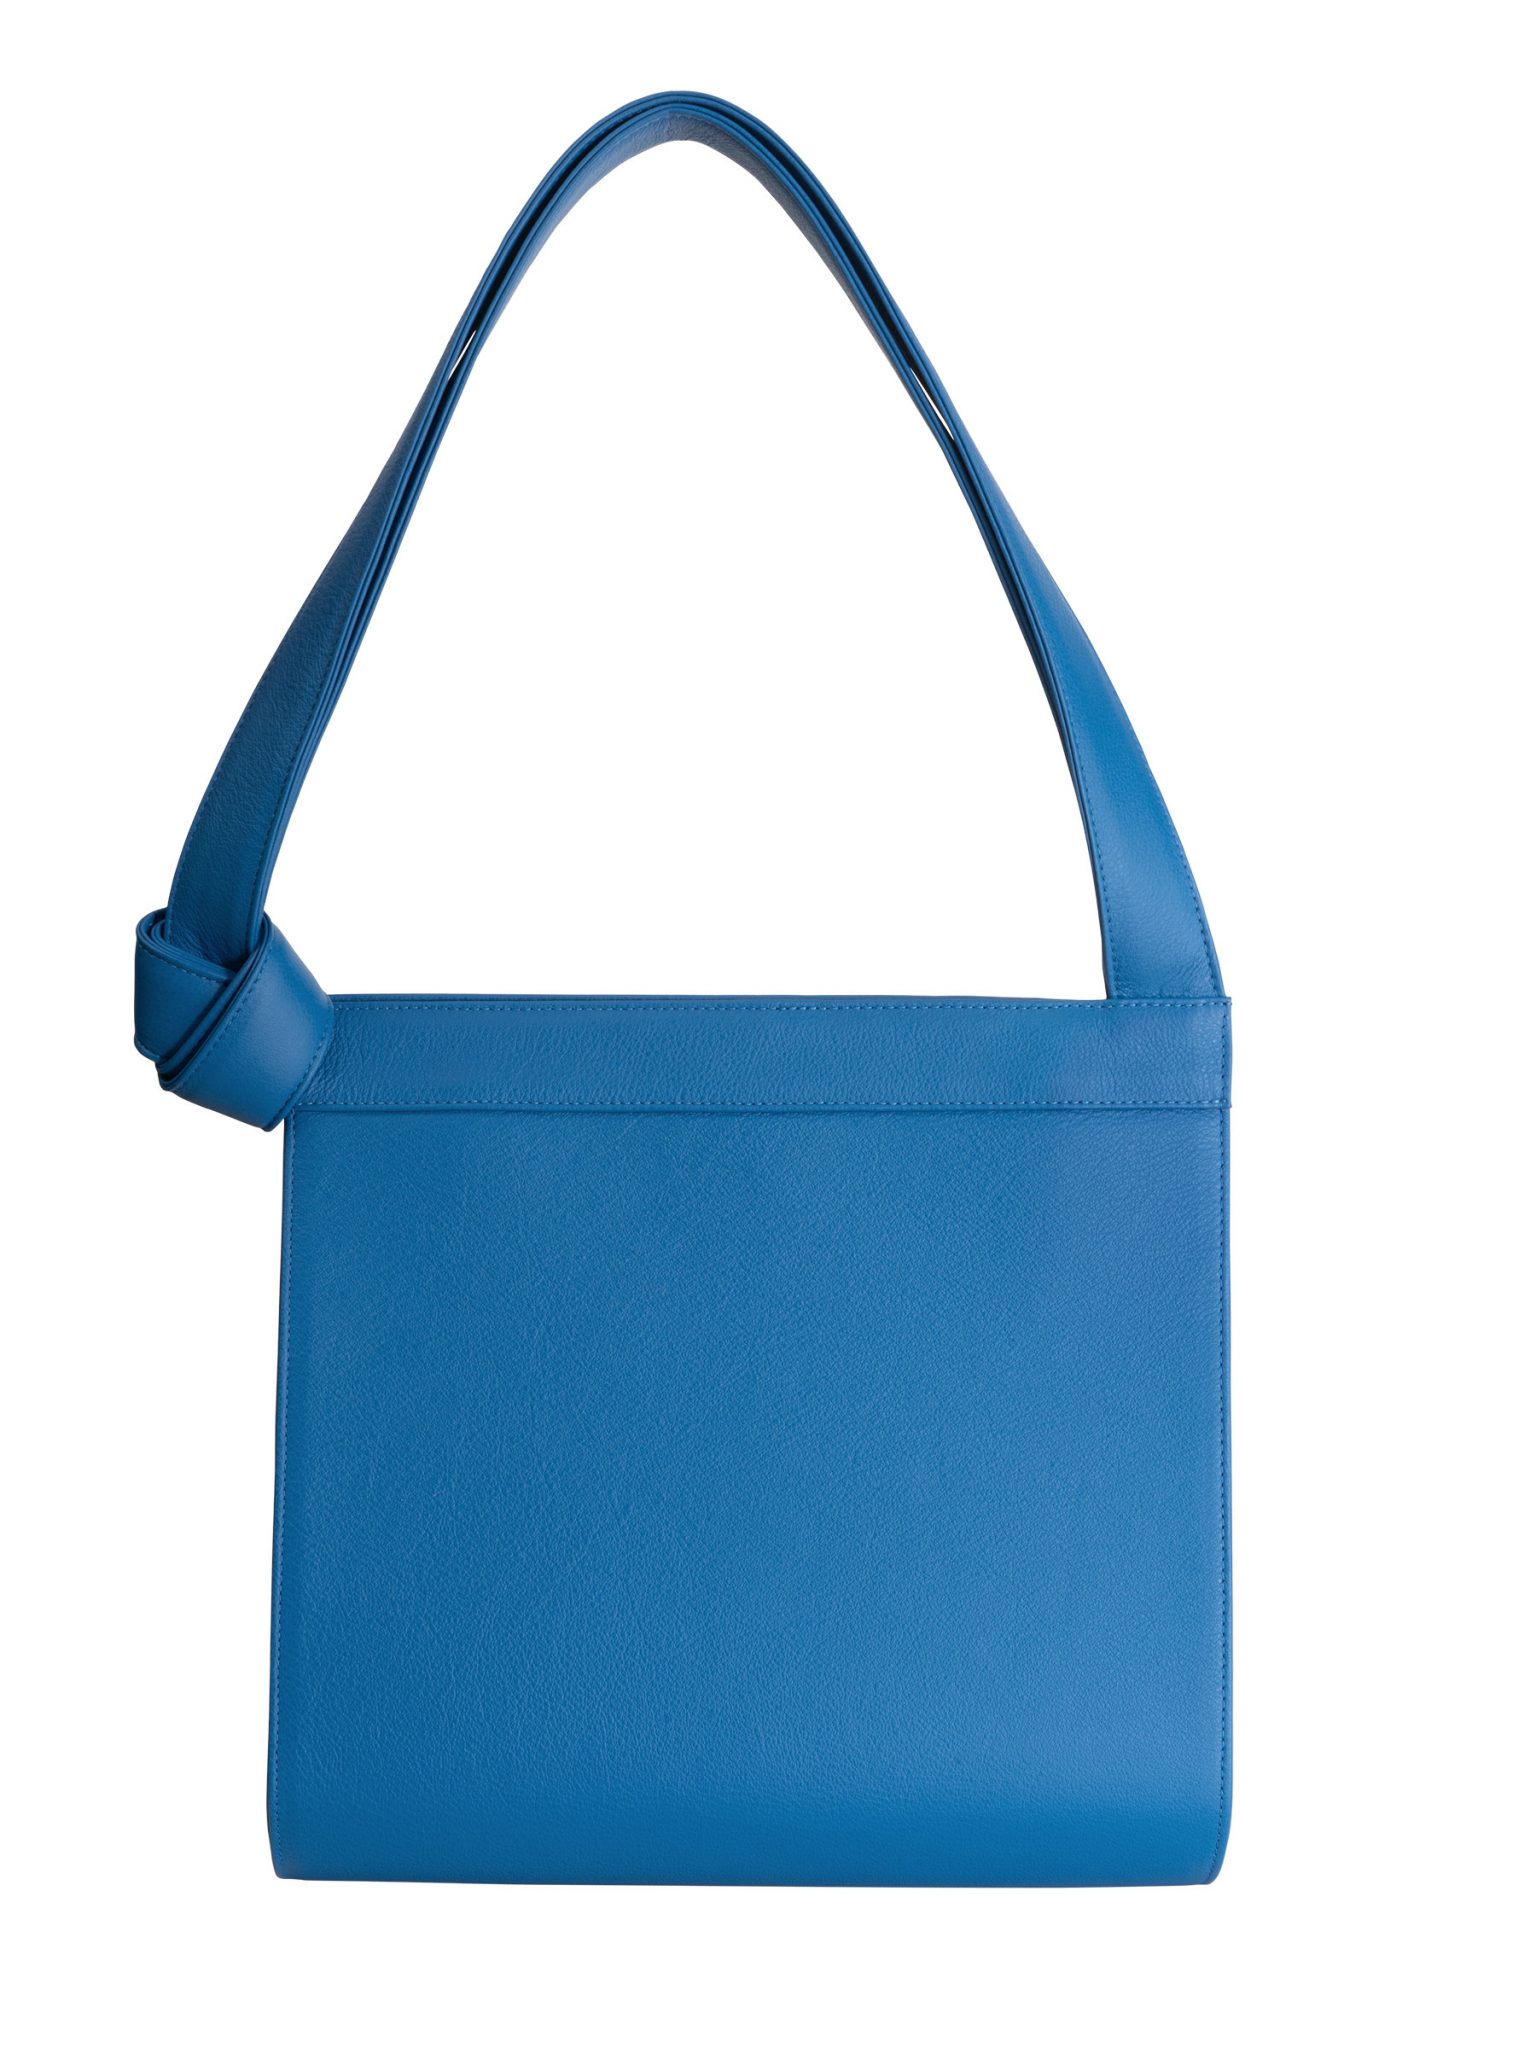 TAPE shoulder bag in azure calfskin leather | TSATSAS